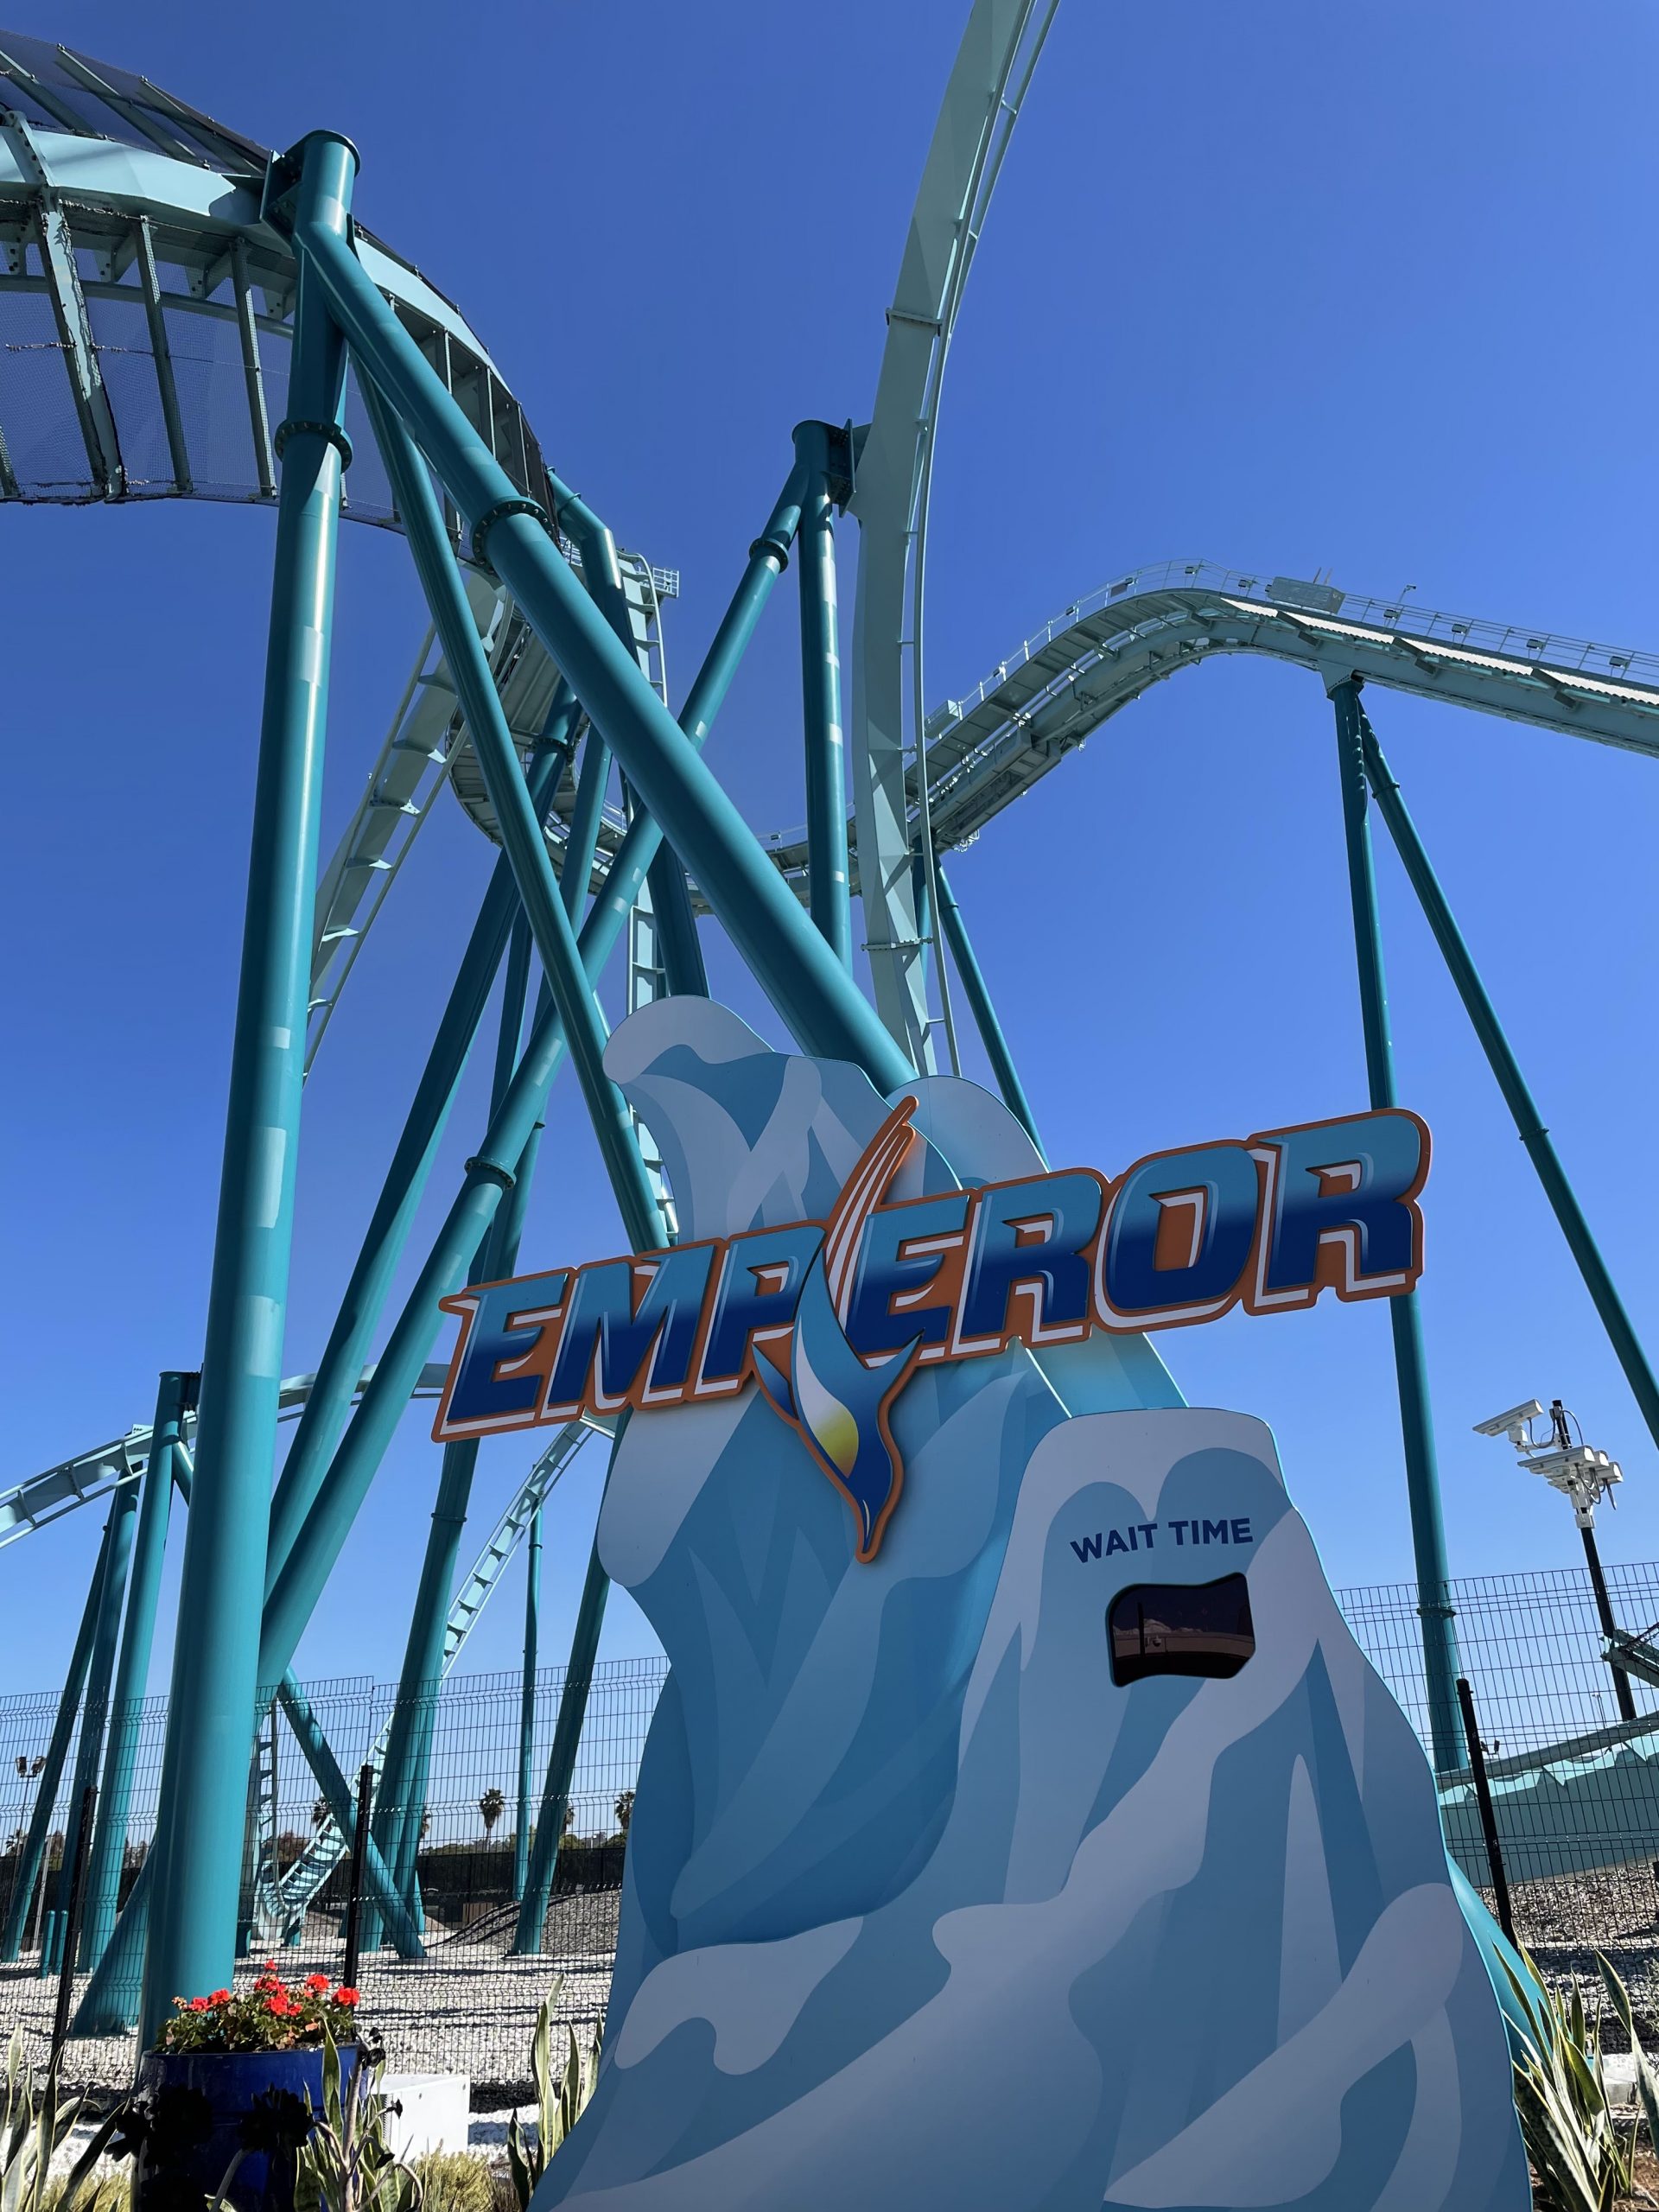 SeaWorld San Diego roller coaster opens: 'Emperor' dive ride debuts March 12